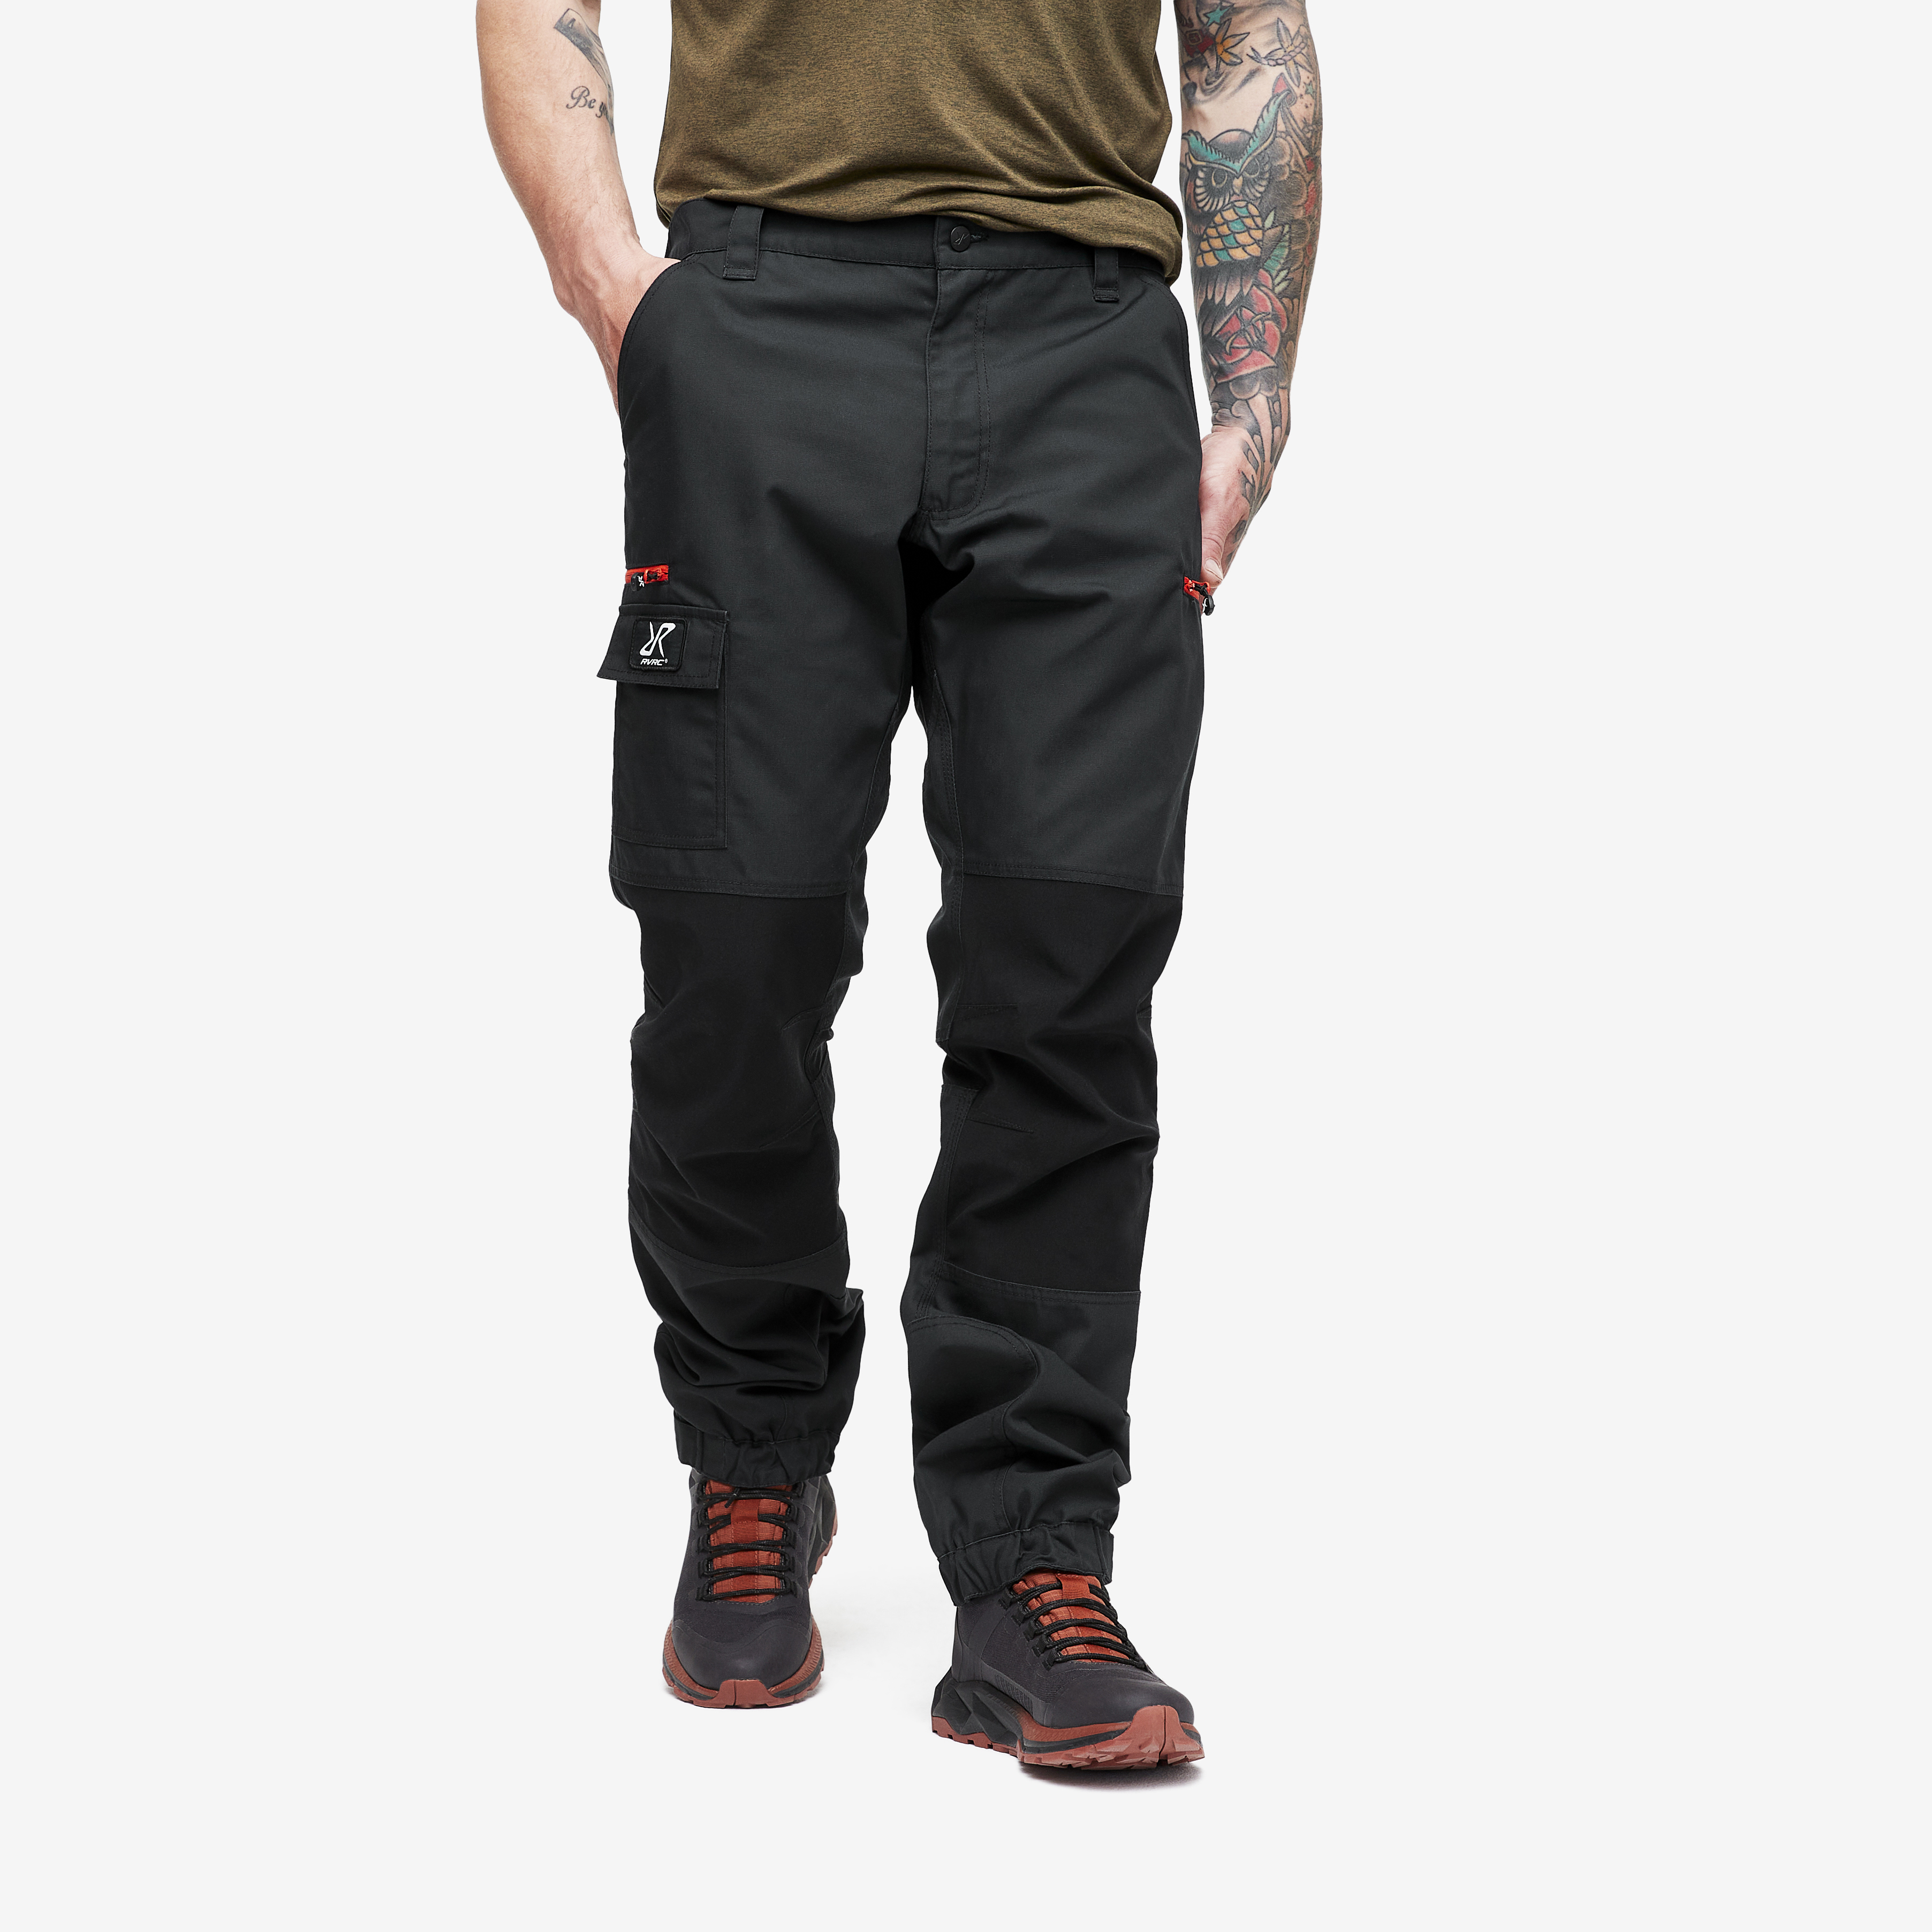 Nordwand Pants Charcoal Black/Lava Homme